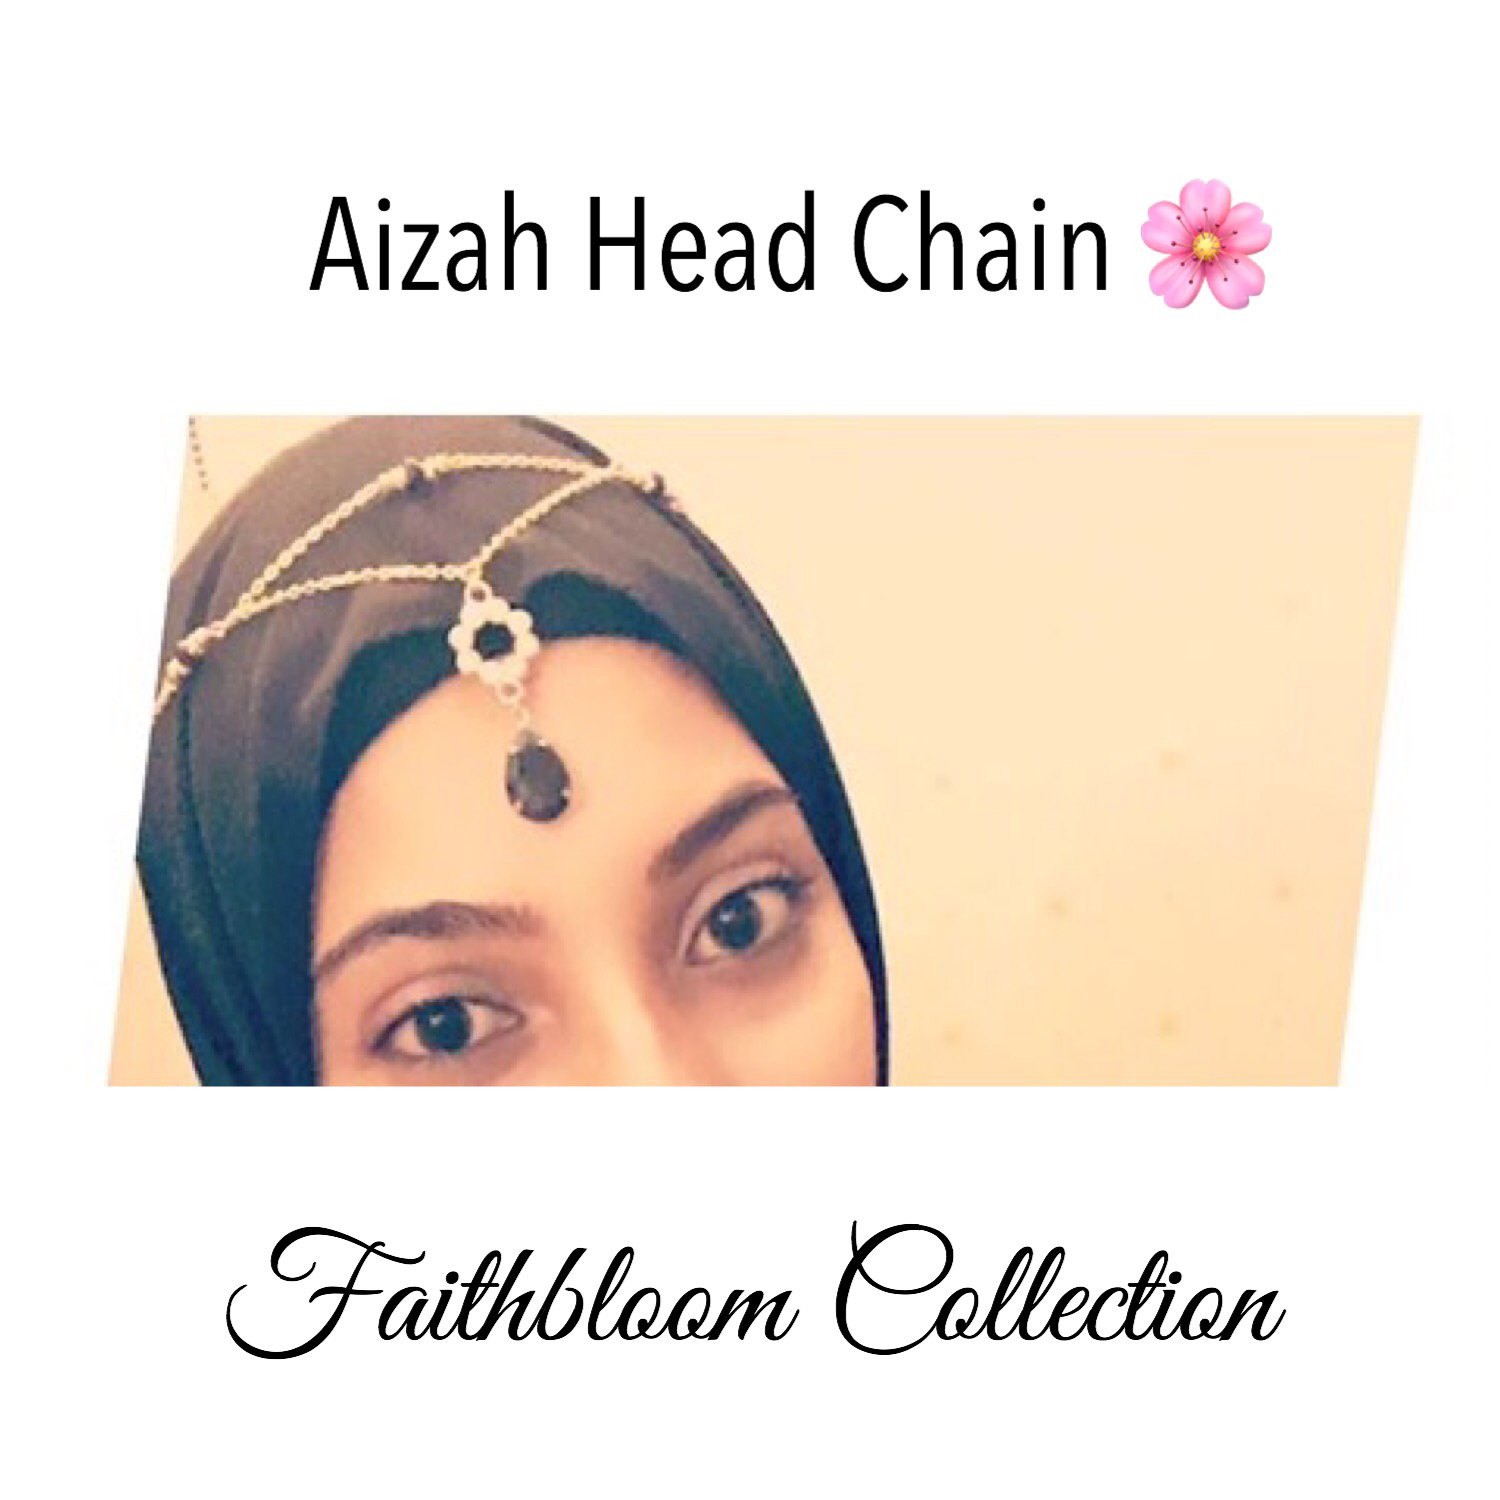 Image of Aizah Head Chains and Hand Chain set